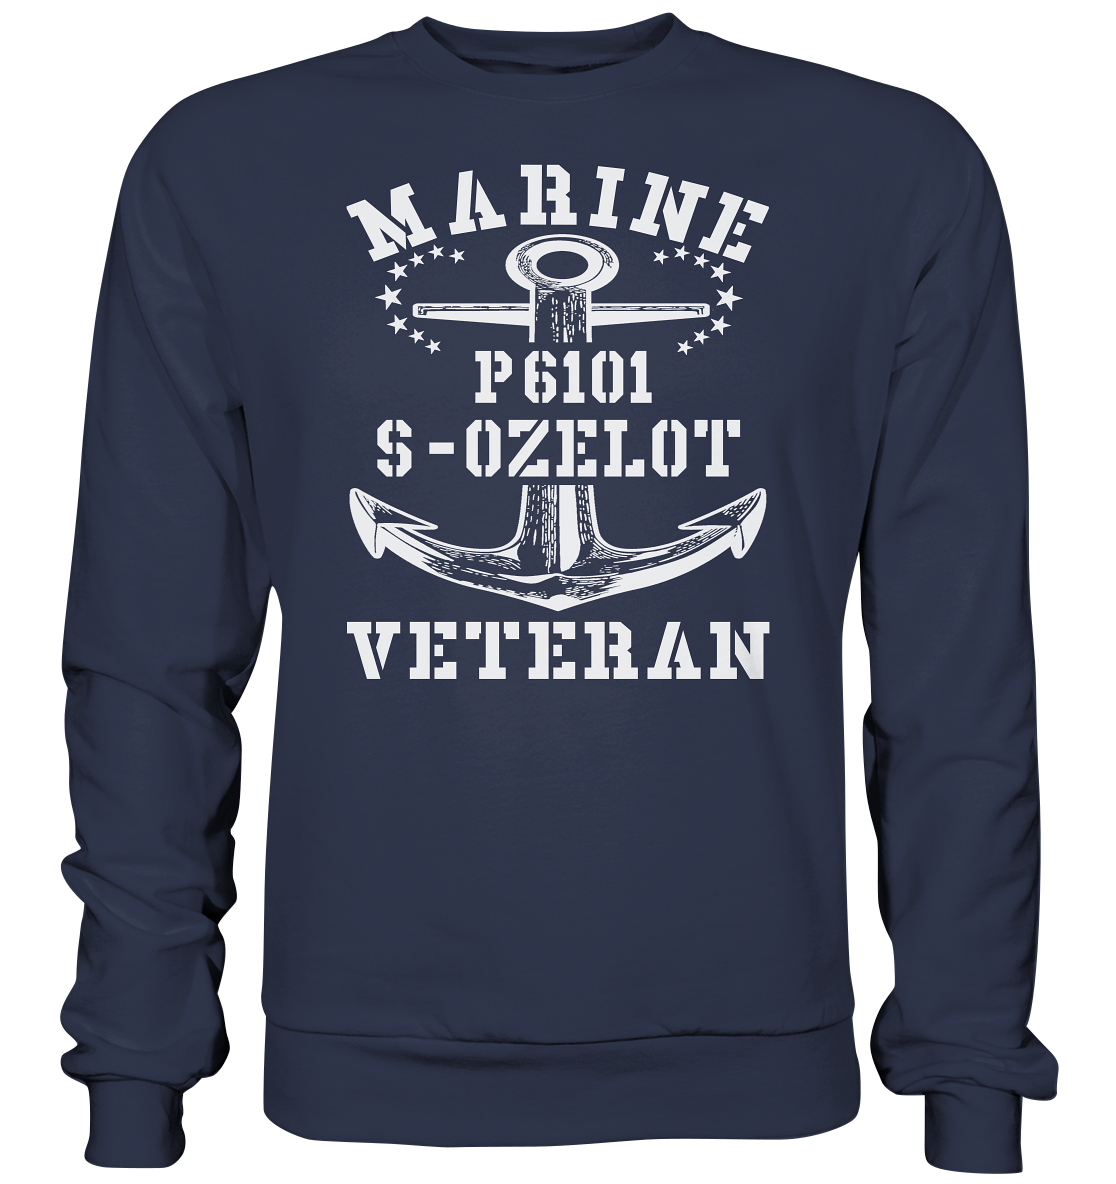 P6101 S-OZELOT Marine Veteran - Premium Sweatshirt